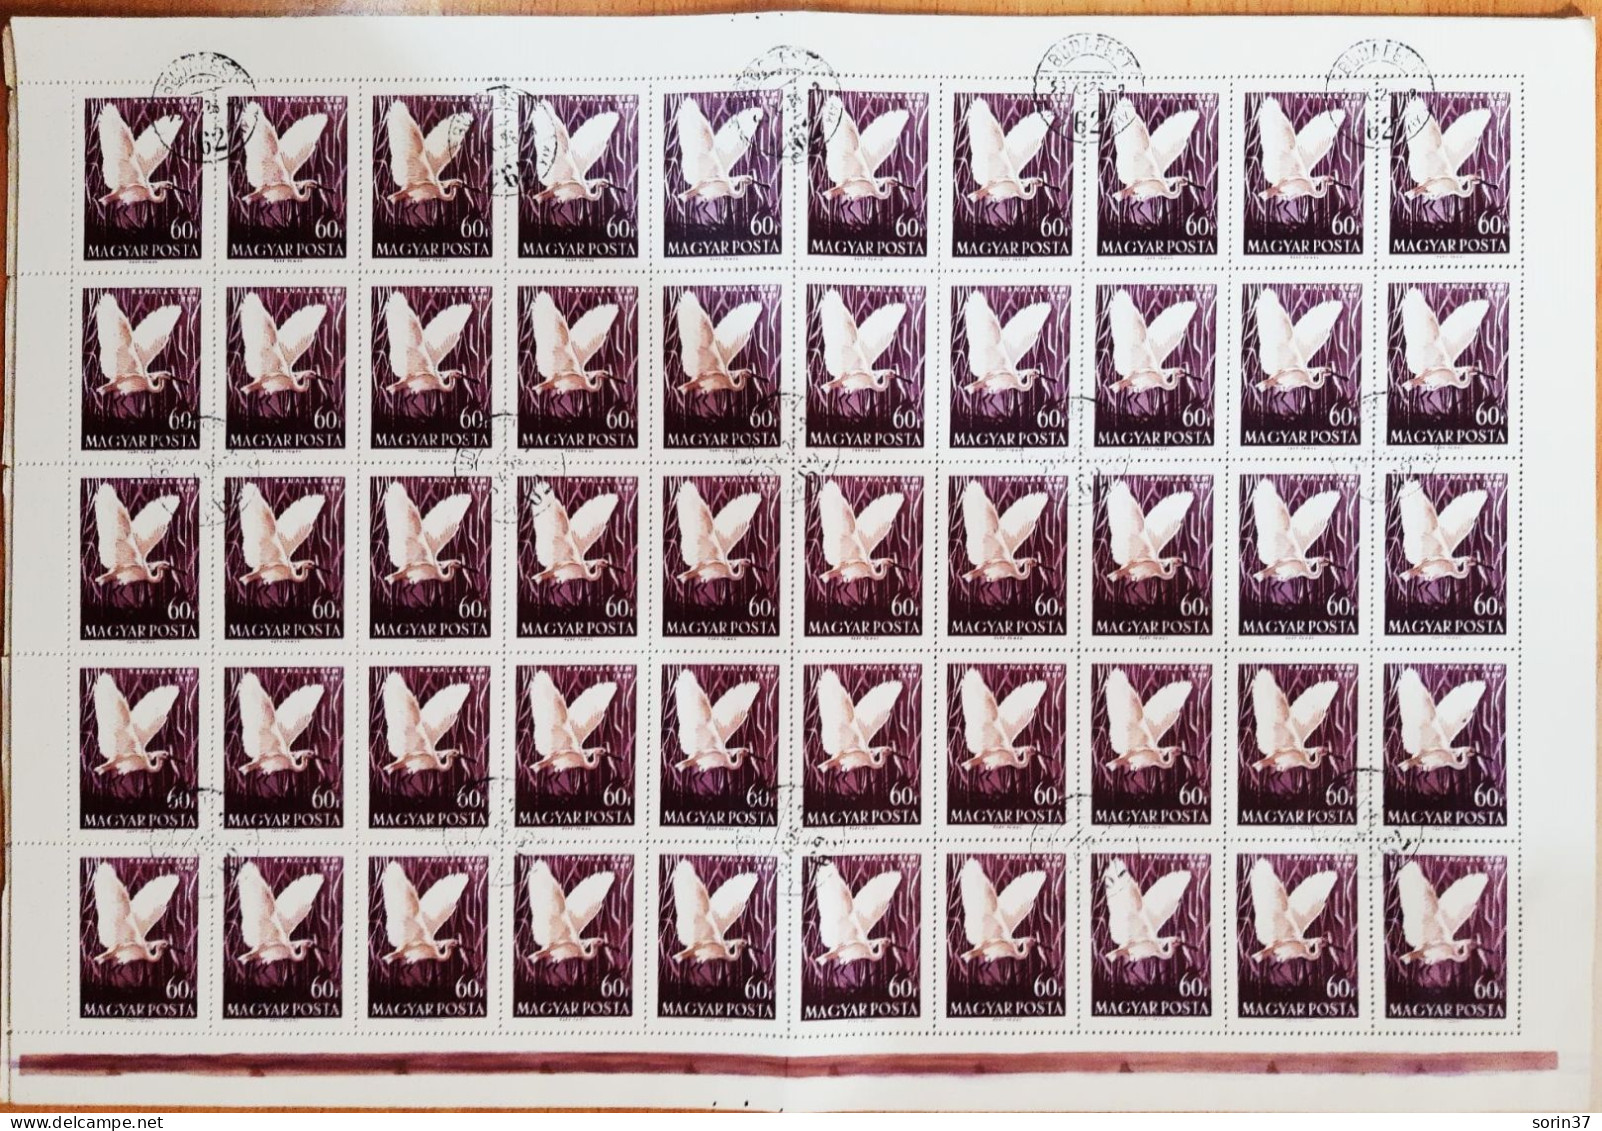 Hungria Pliego 50 Sellos Año 1959  Usado Aves - Used Stamps